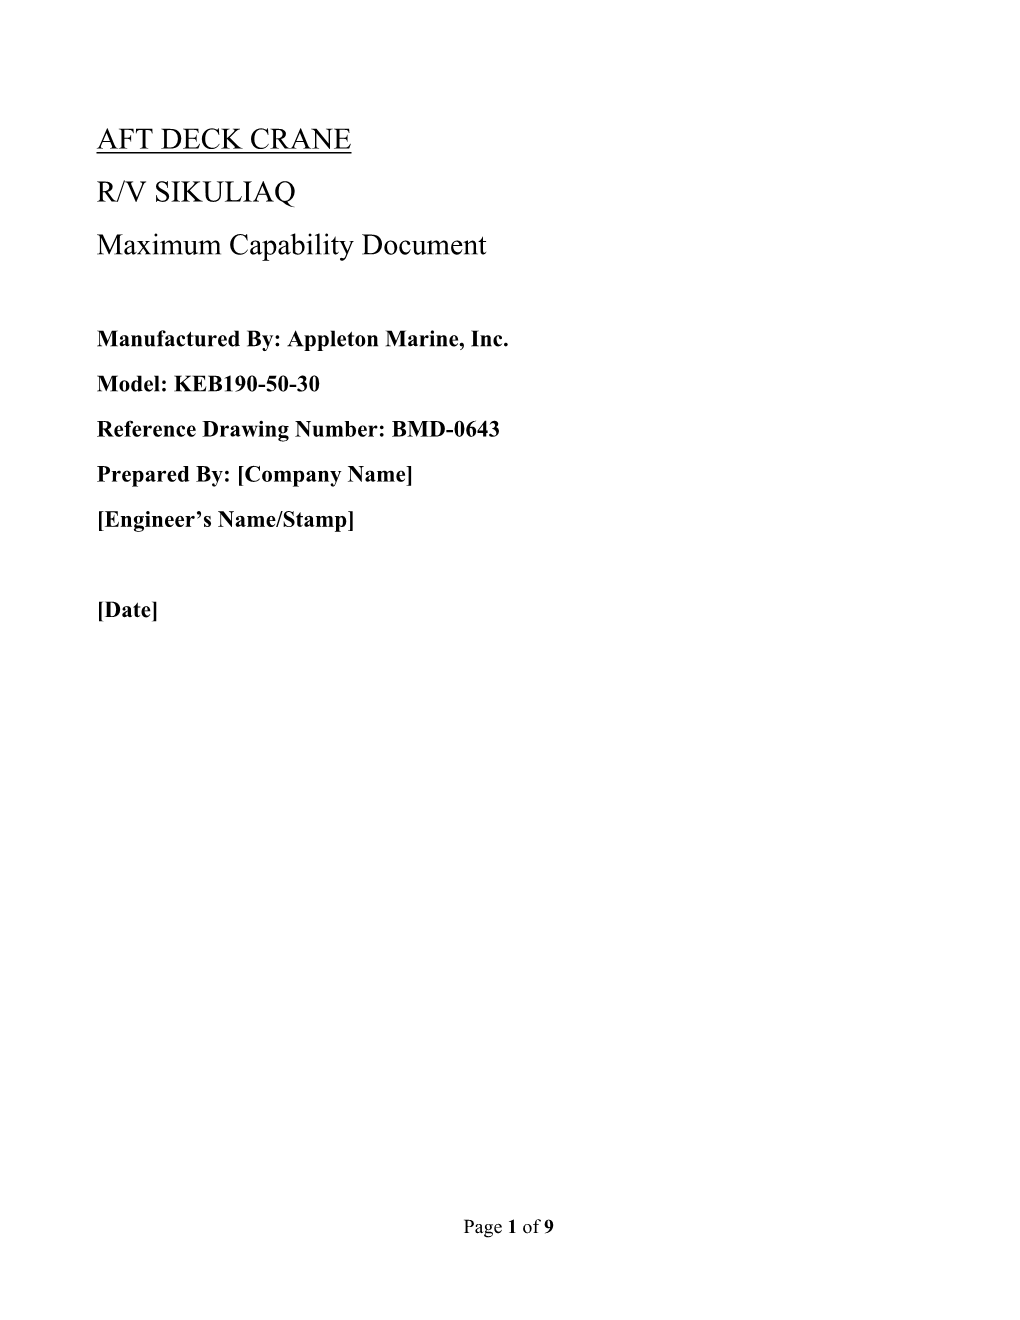 AFT DECK CRANE R/V SIKULIAQ Maximum Capability Document